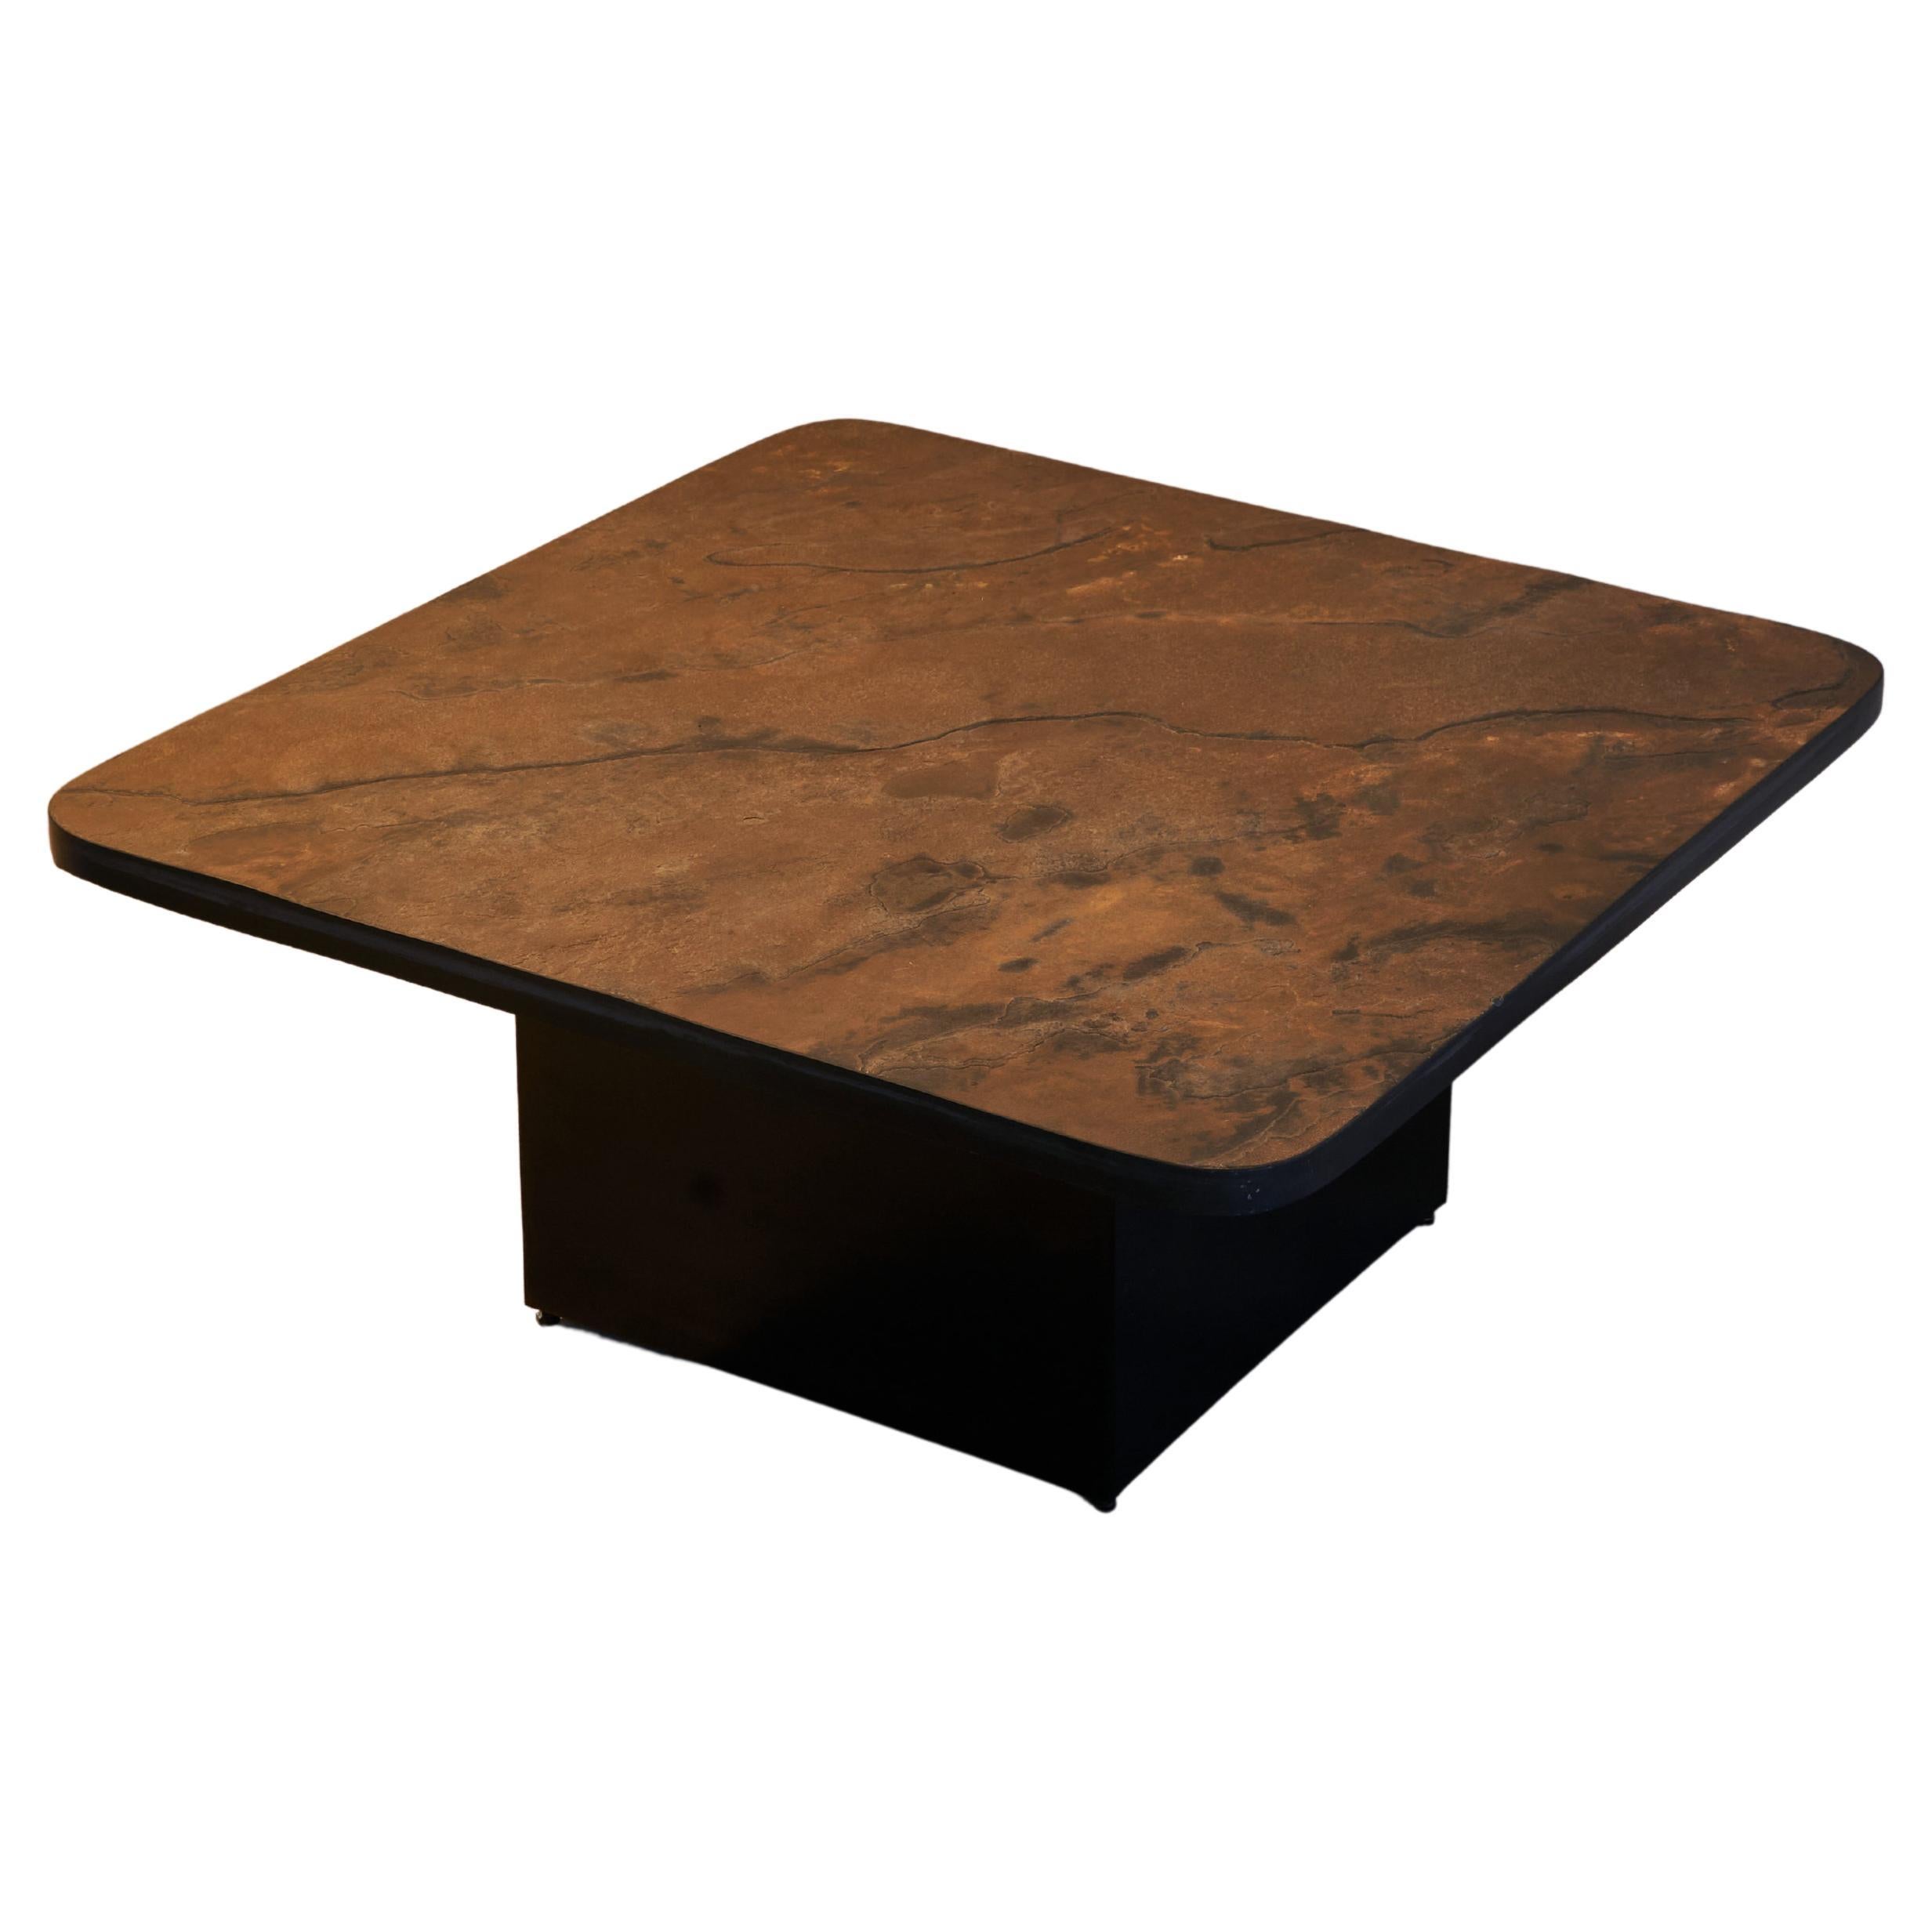 Early Paul Kingma Coffee Table in Sober Rust Colored Stone